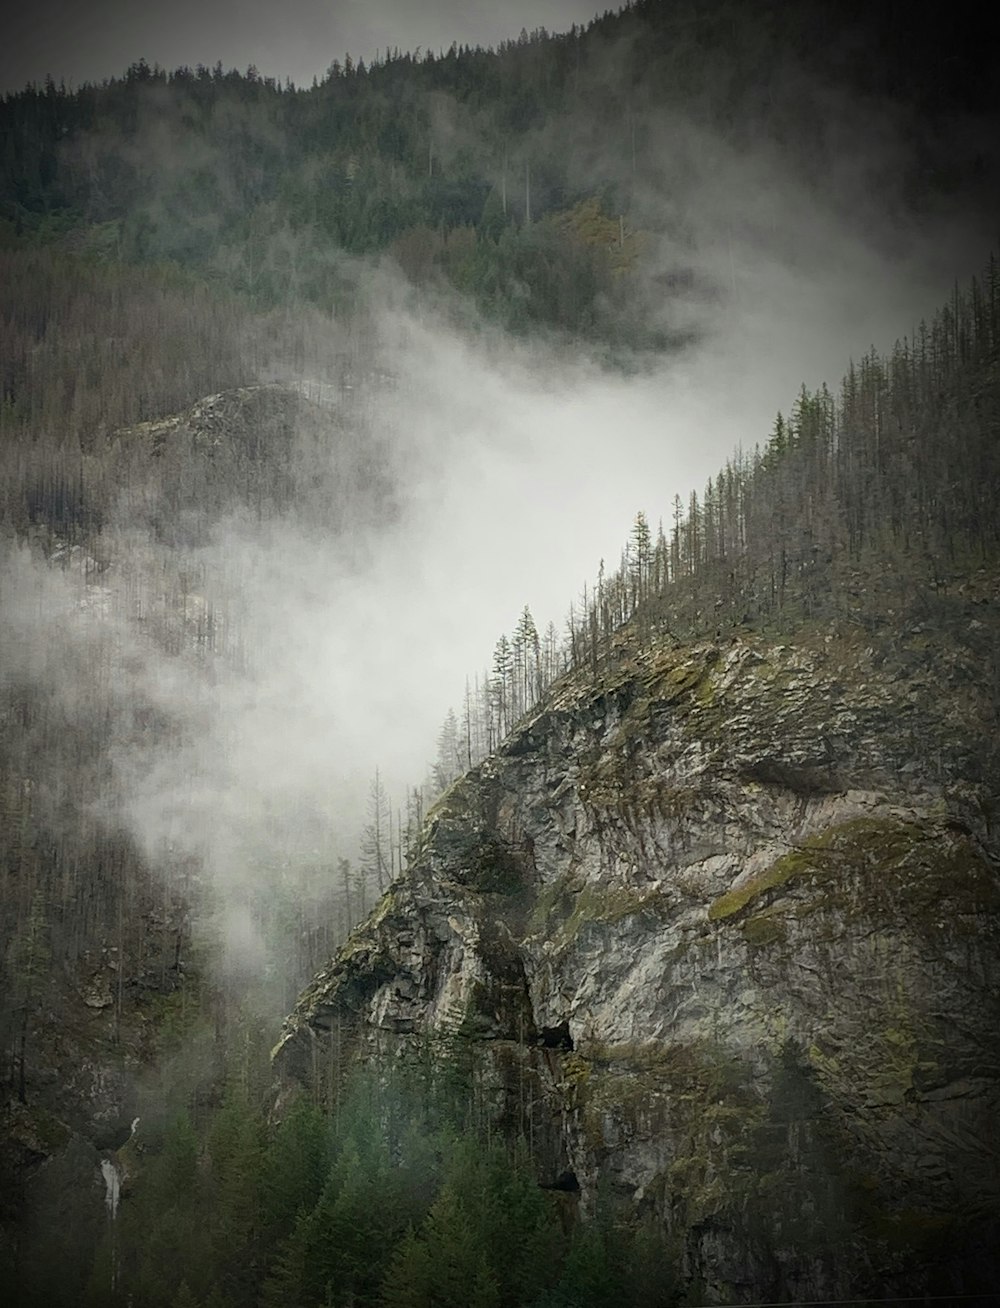 montagne verte et brune couverte de brouillard